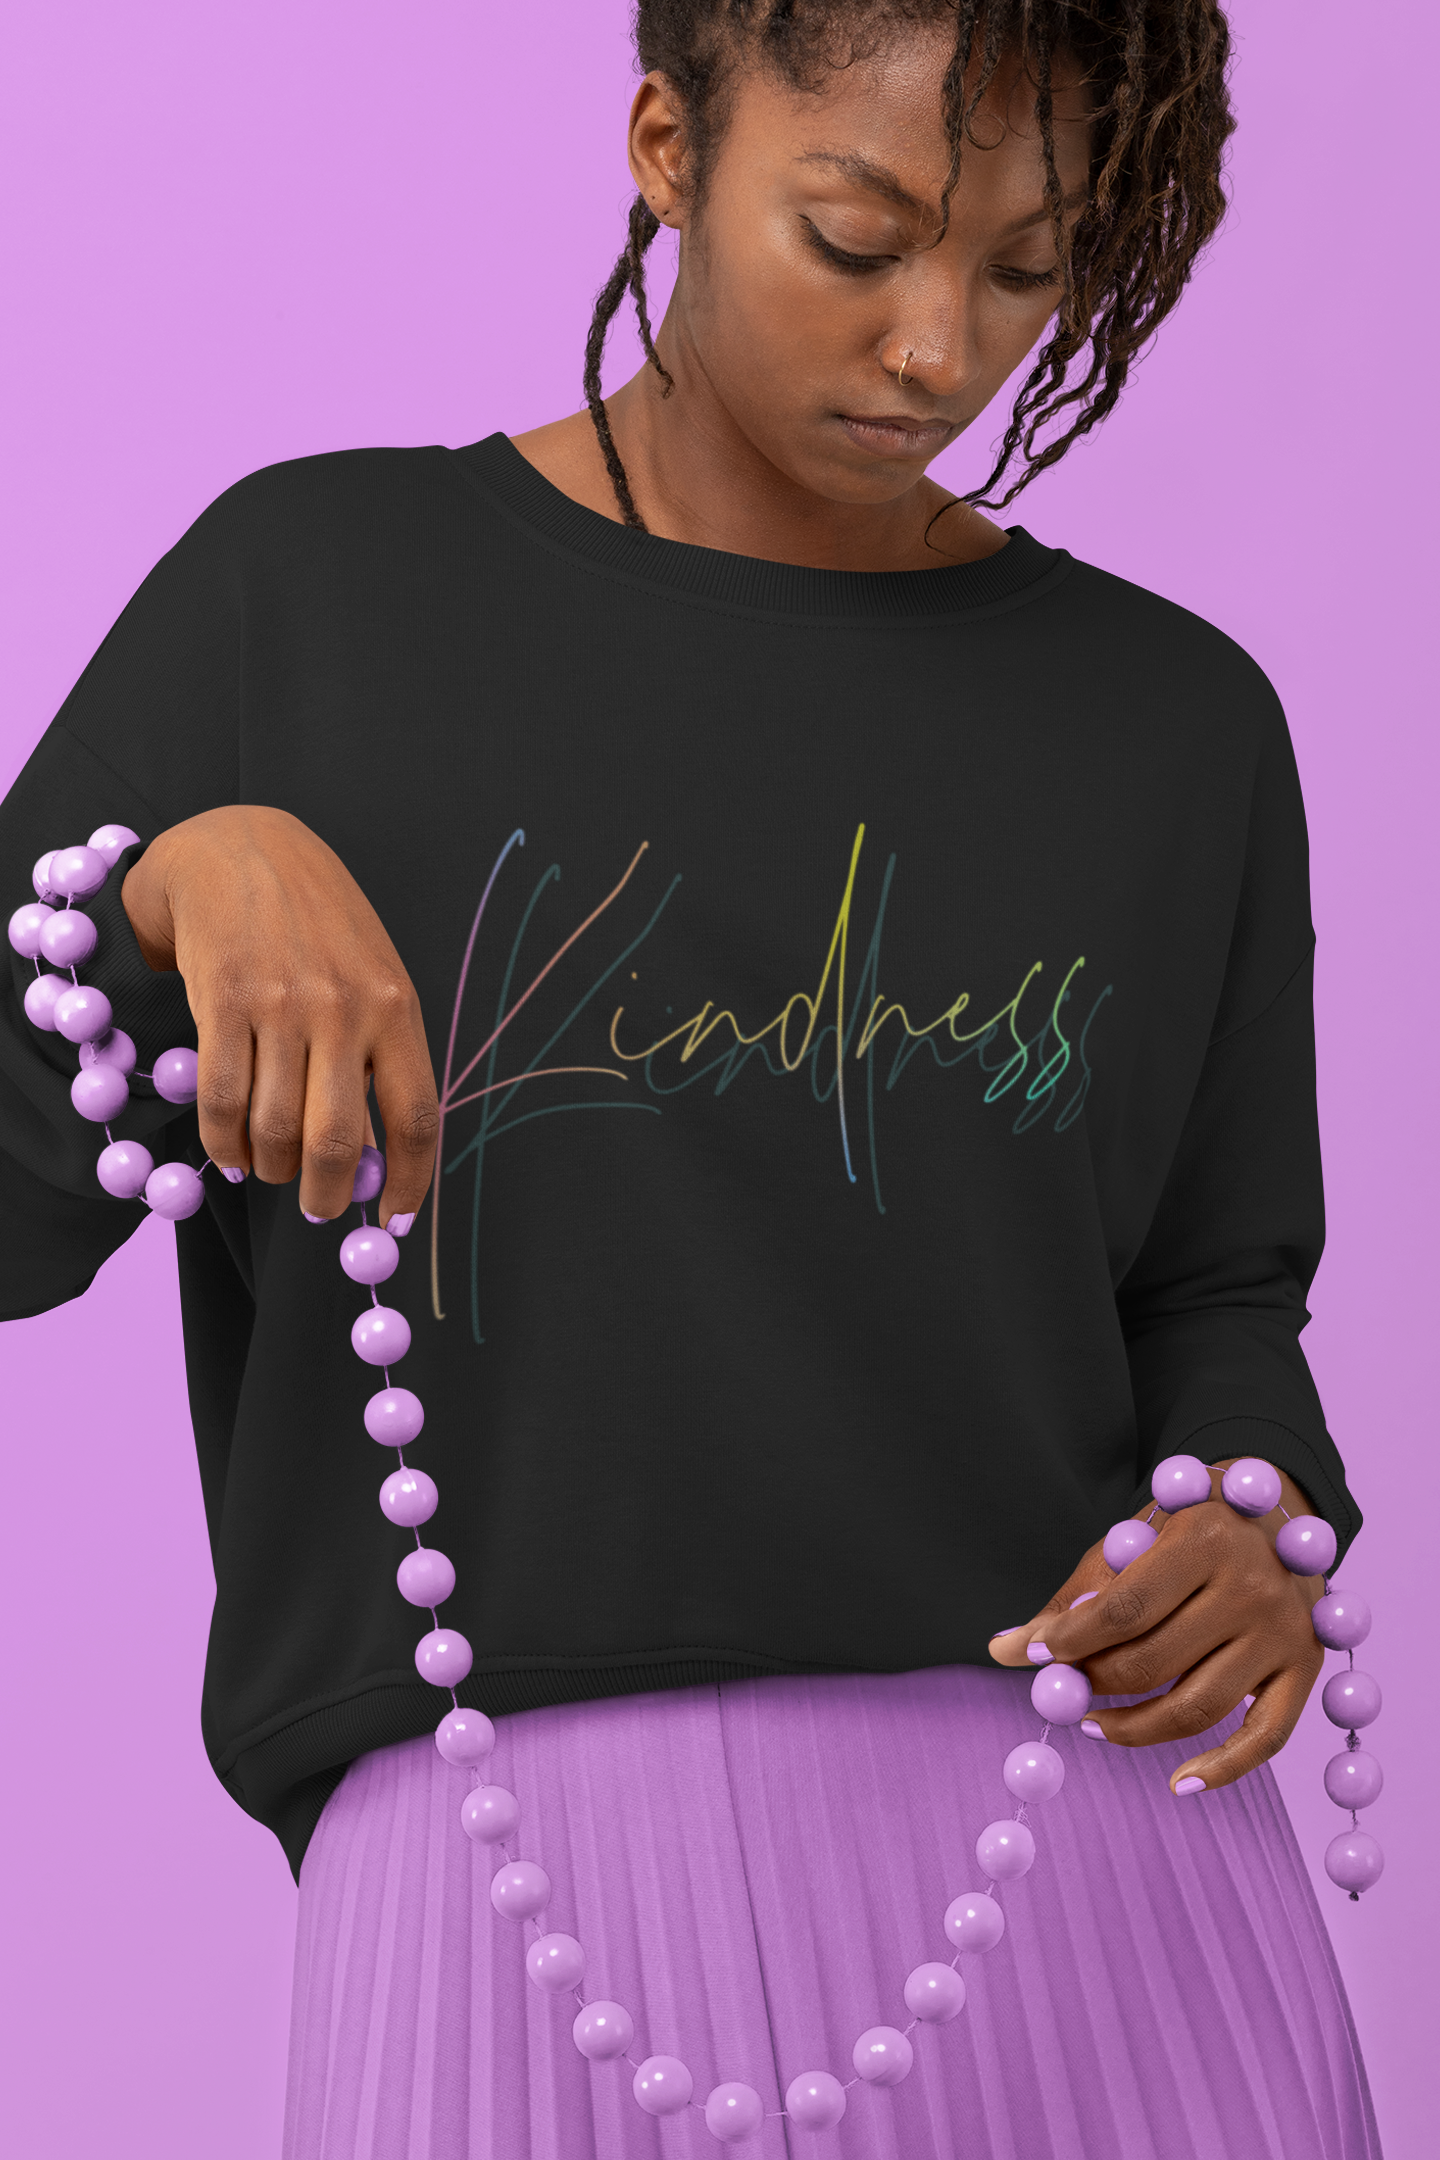 Kindness Sweater, Kindness Inspirational Sweatshirt, Positive Quote Shirt For Women, Unisex Sweater